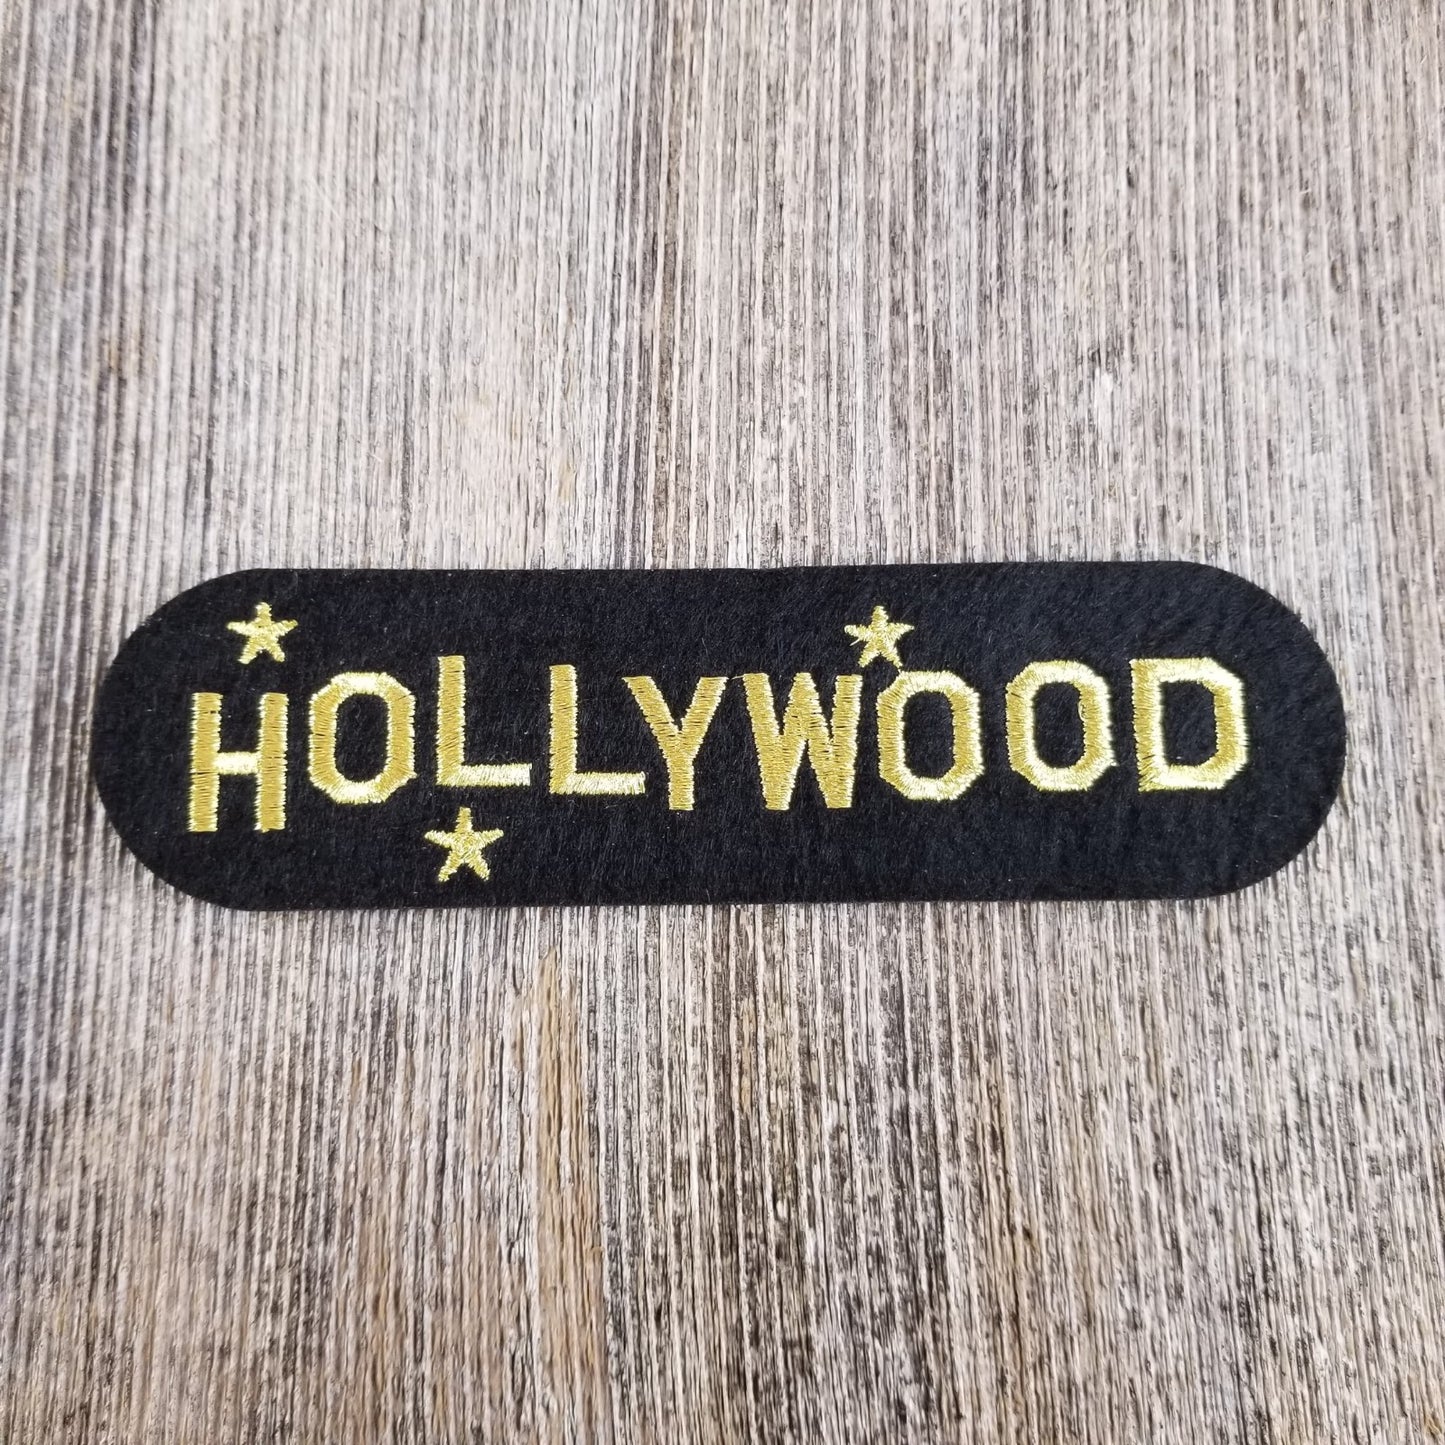 Hollywood Patch - Iron On California Souvenir - Gold Text Badge Emblem